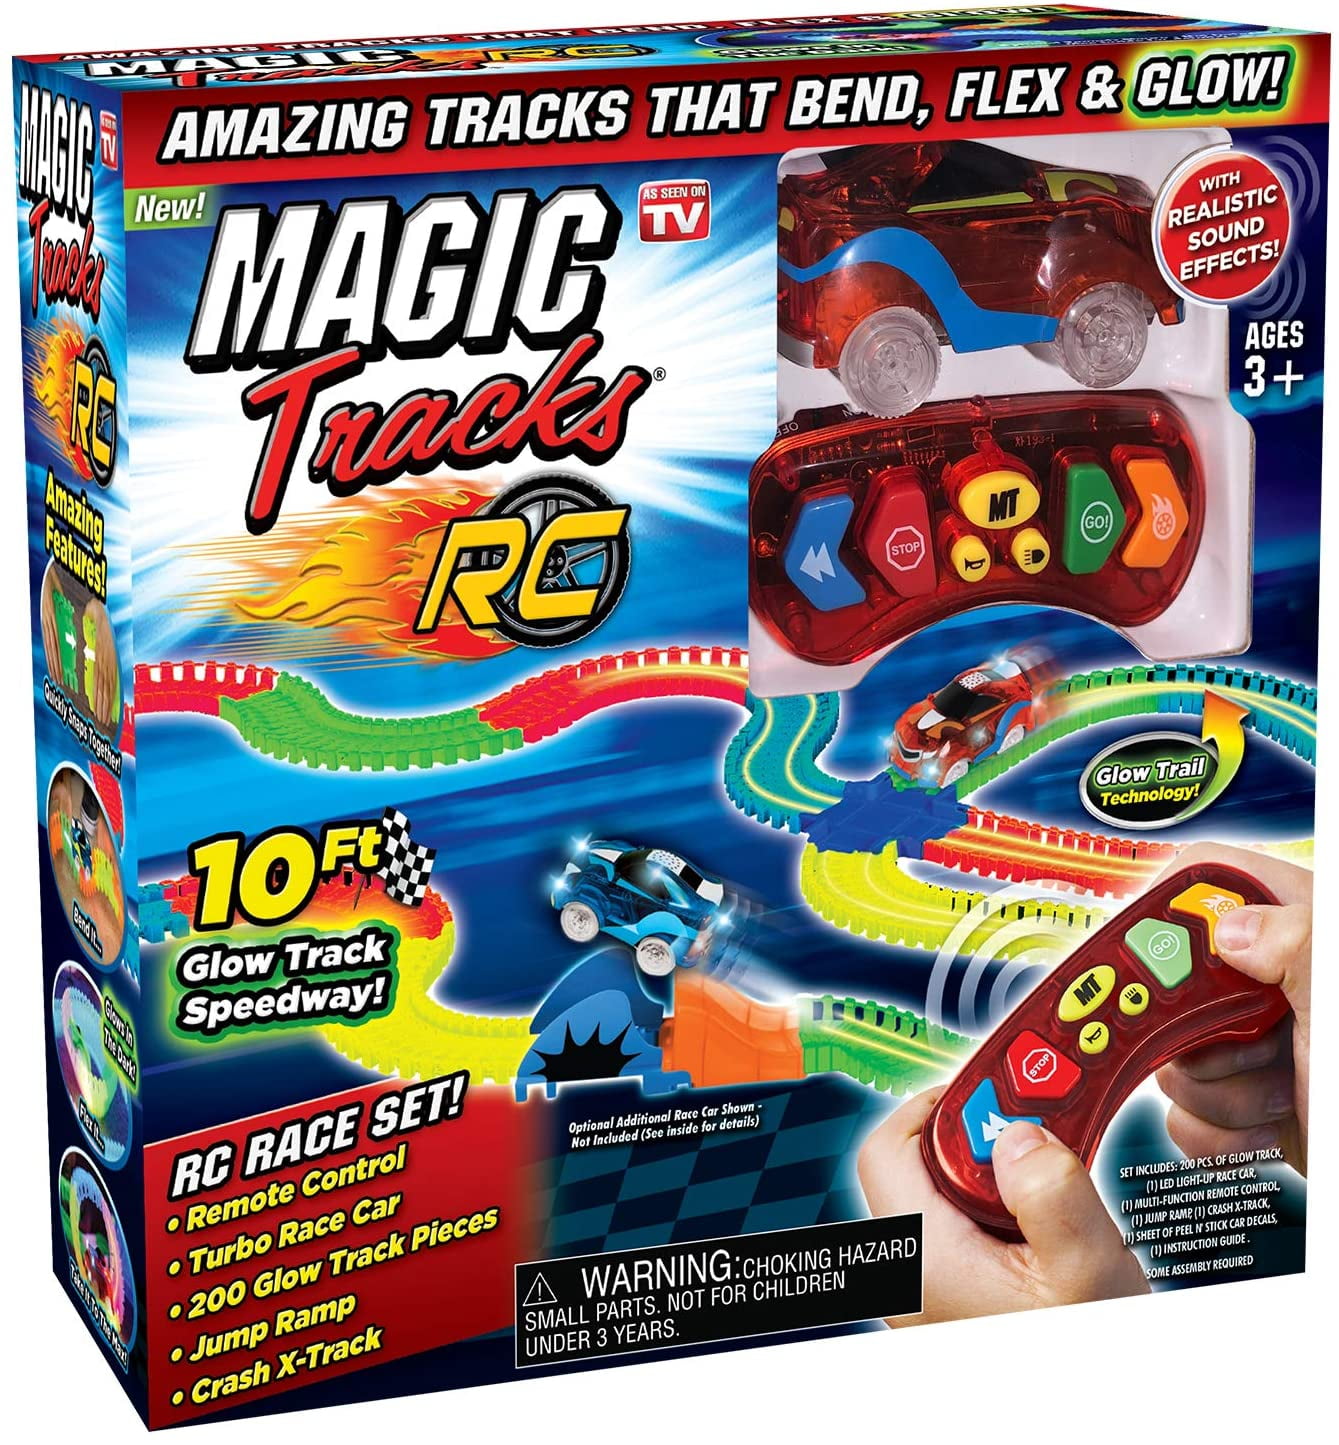 Magic Tracks Turbo RC Remote Control Orange Race Car 10' Flexible Glow Track 